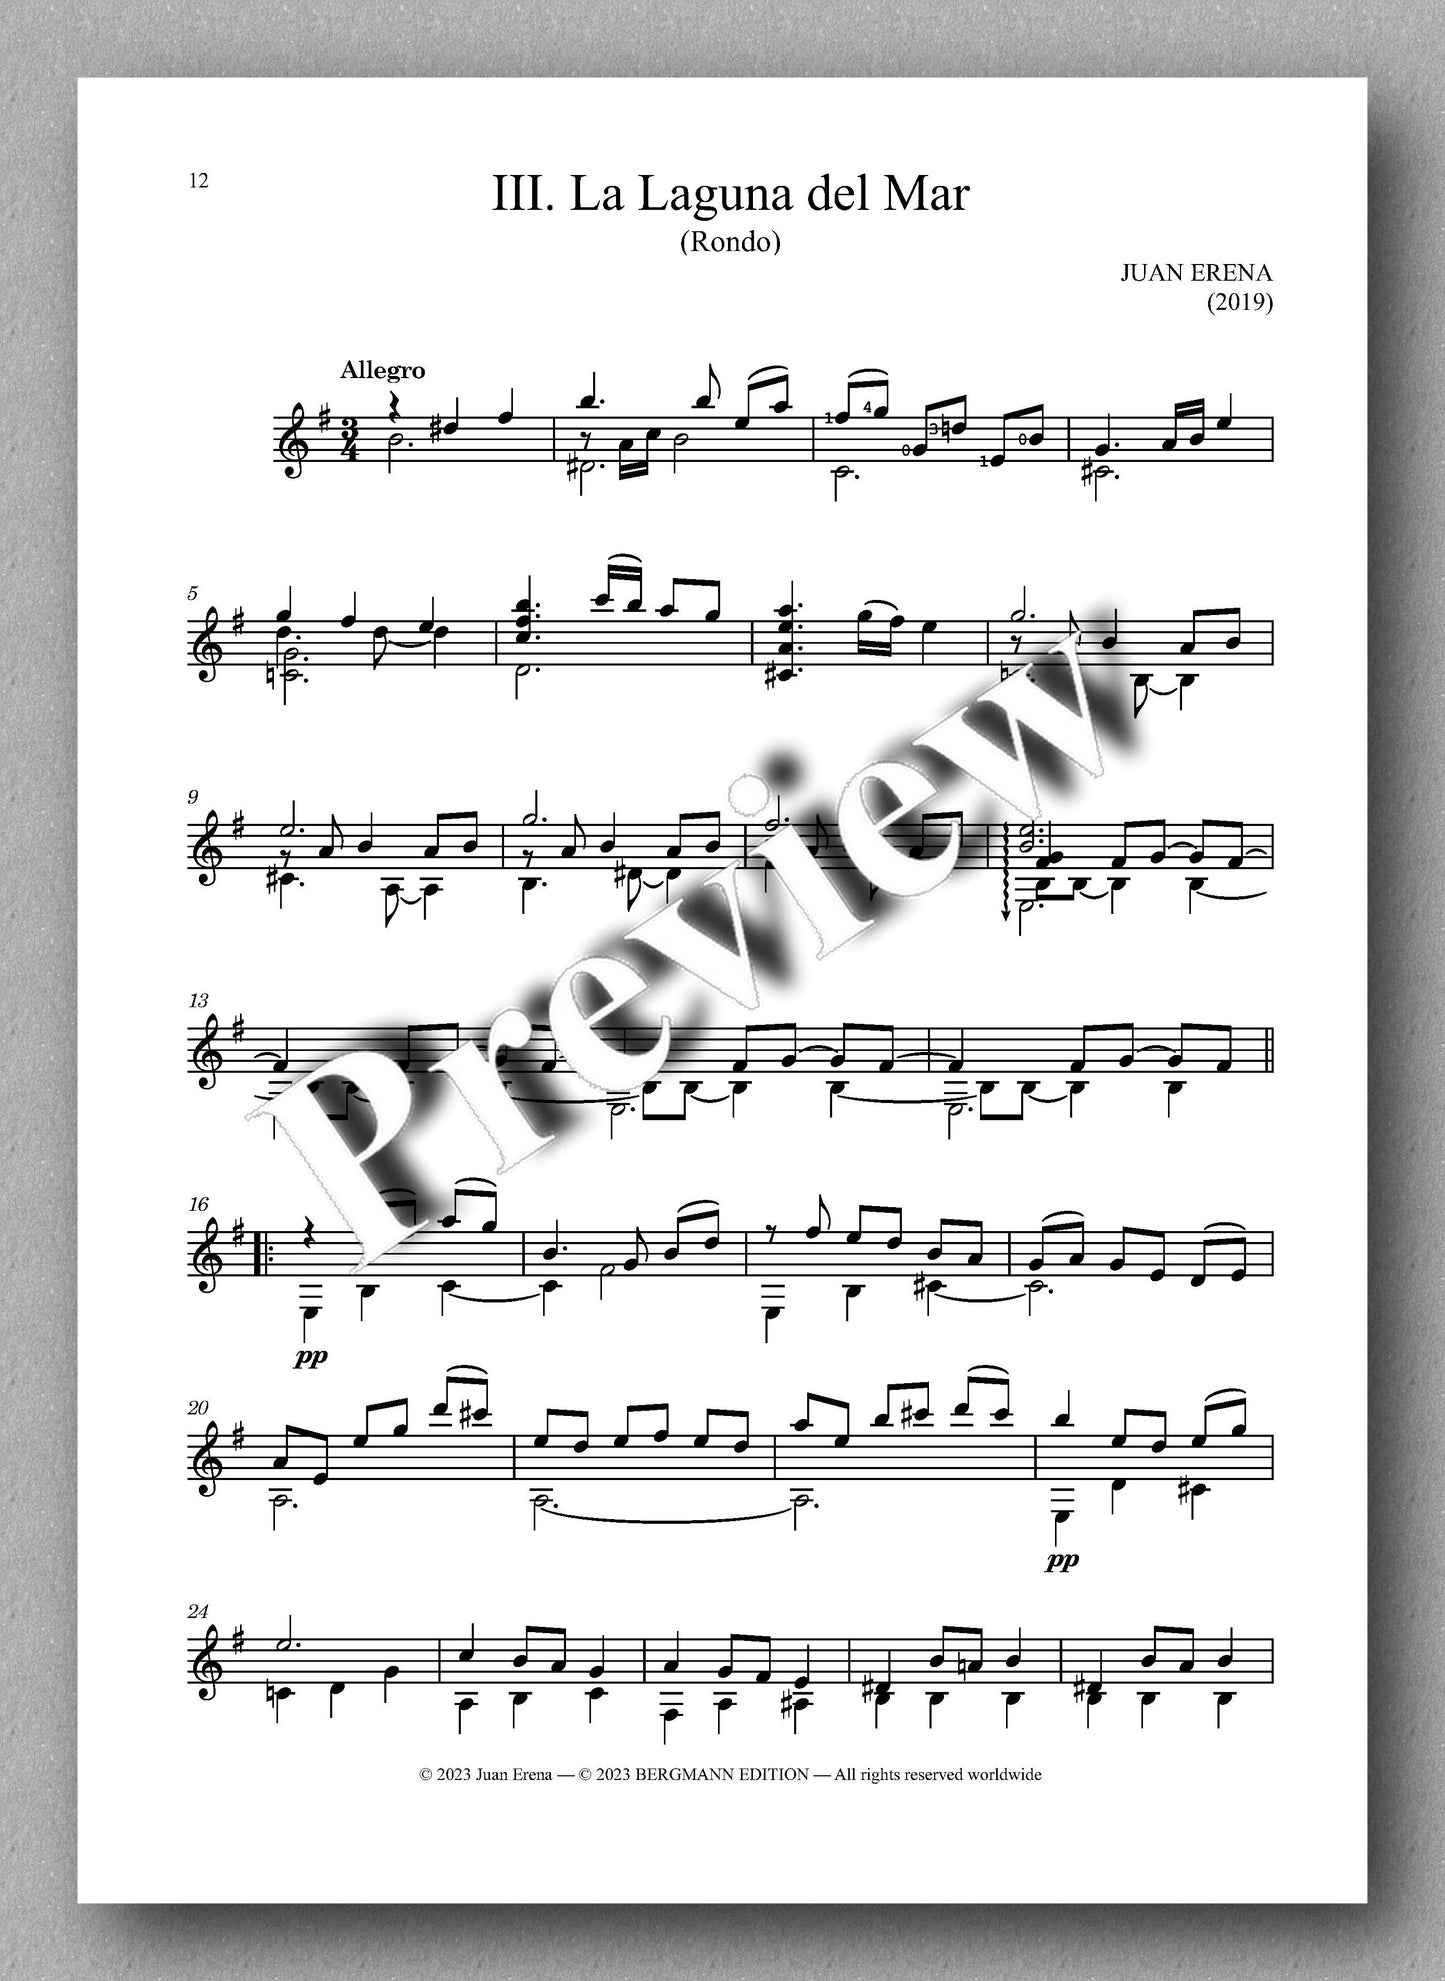 Juan Erena, Sonata III, “ Sonata Insular” - preview of the musicscore 3